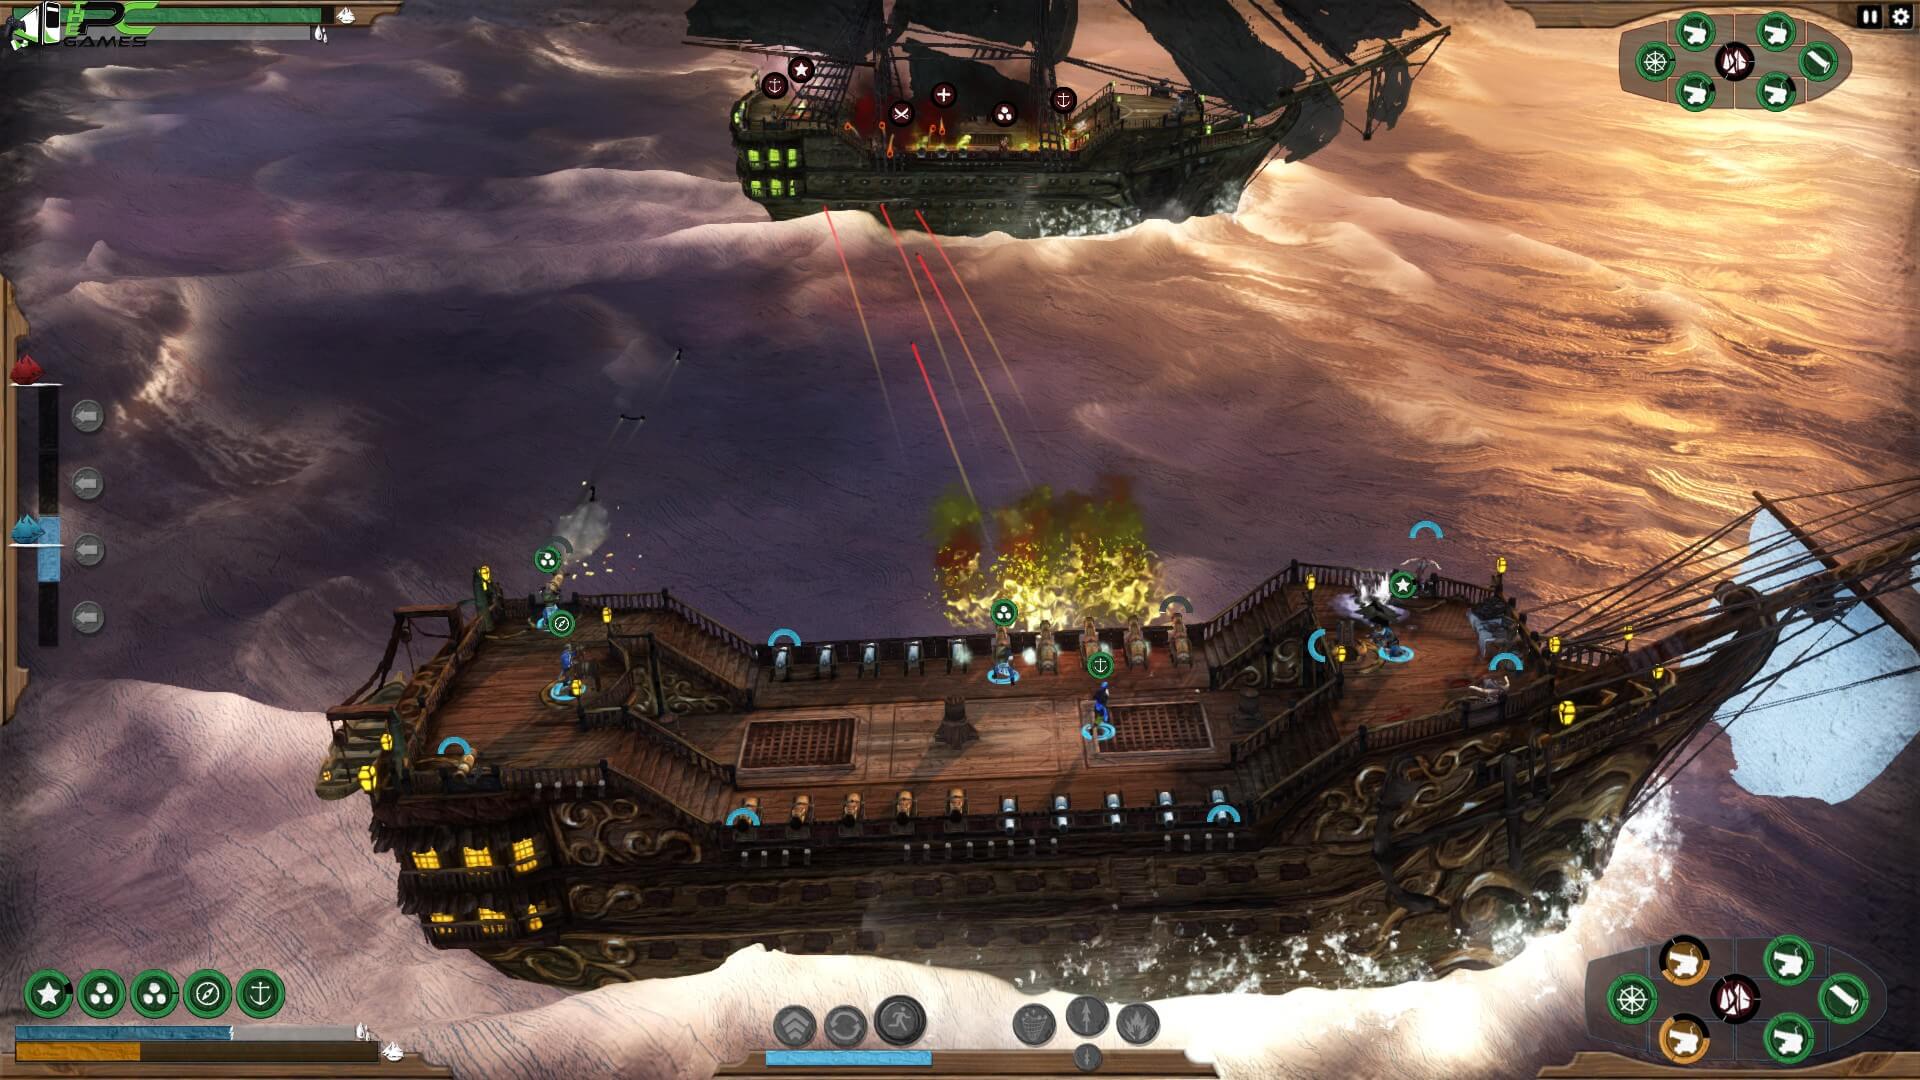 Abandon Ship Blade of the Assassin Screenshot 2